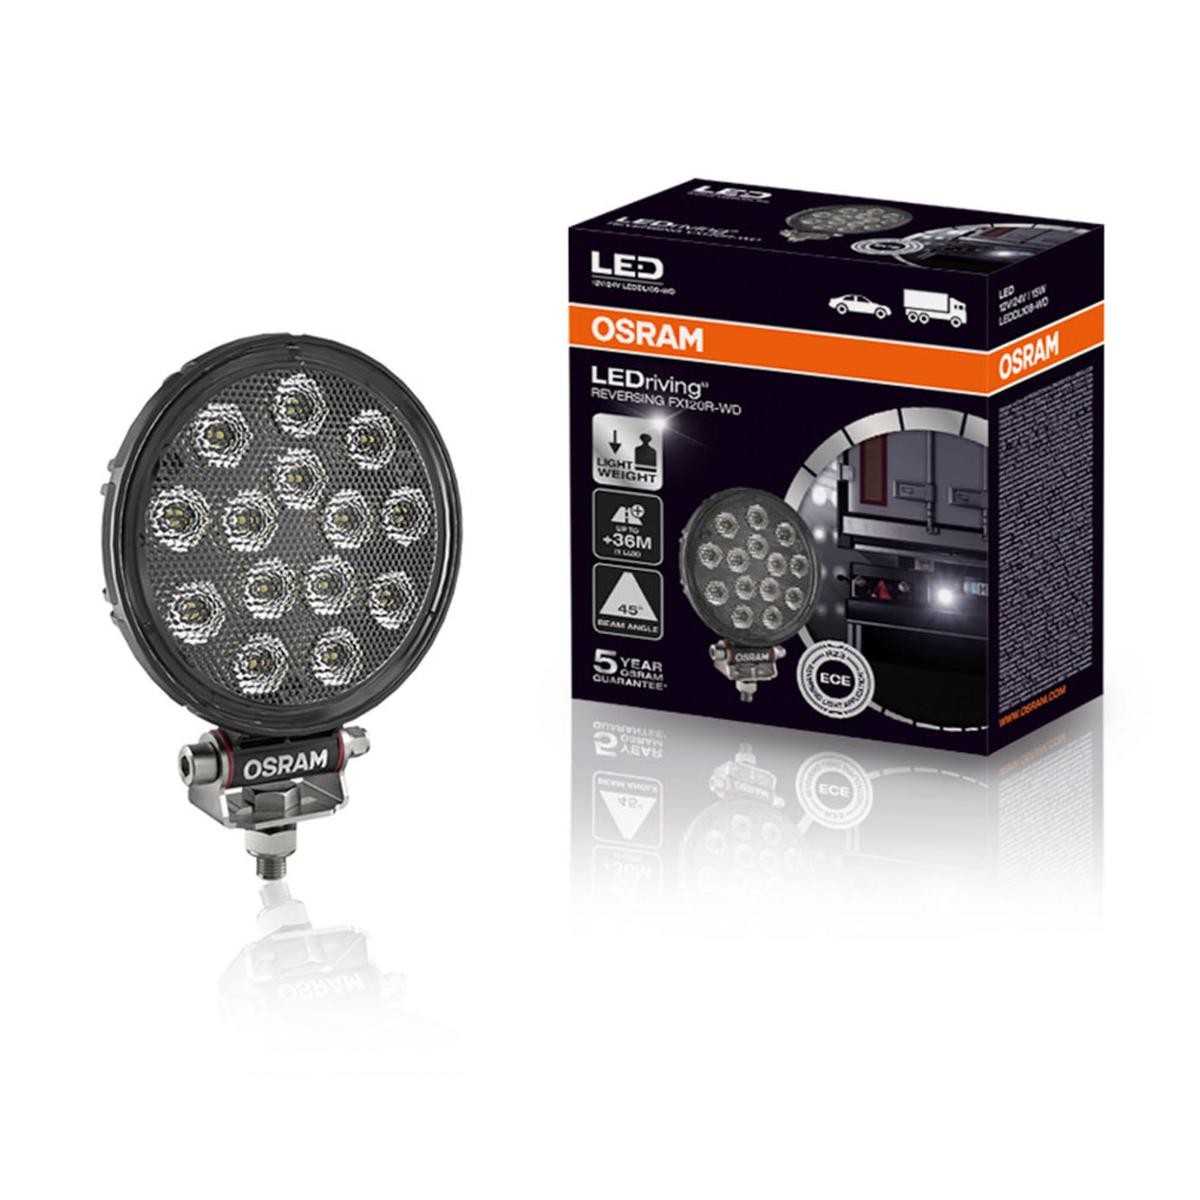 OSRAM LEDriving driving lights - Value Series LEDDL108WD Reverse lamp Tiguan Mk1 2.0 TDI 140 hp Diesel 2014 price